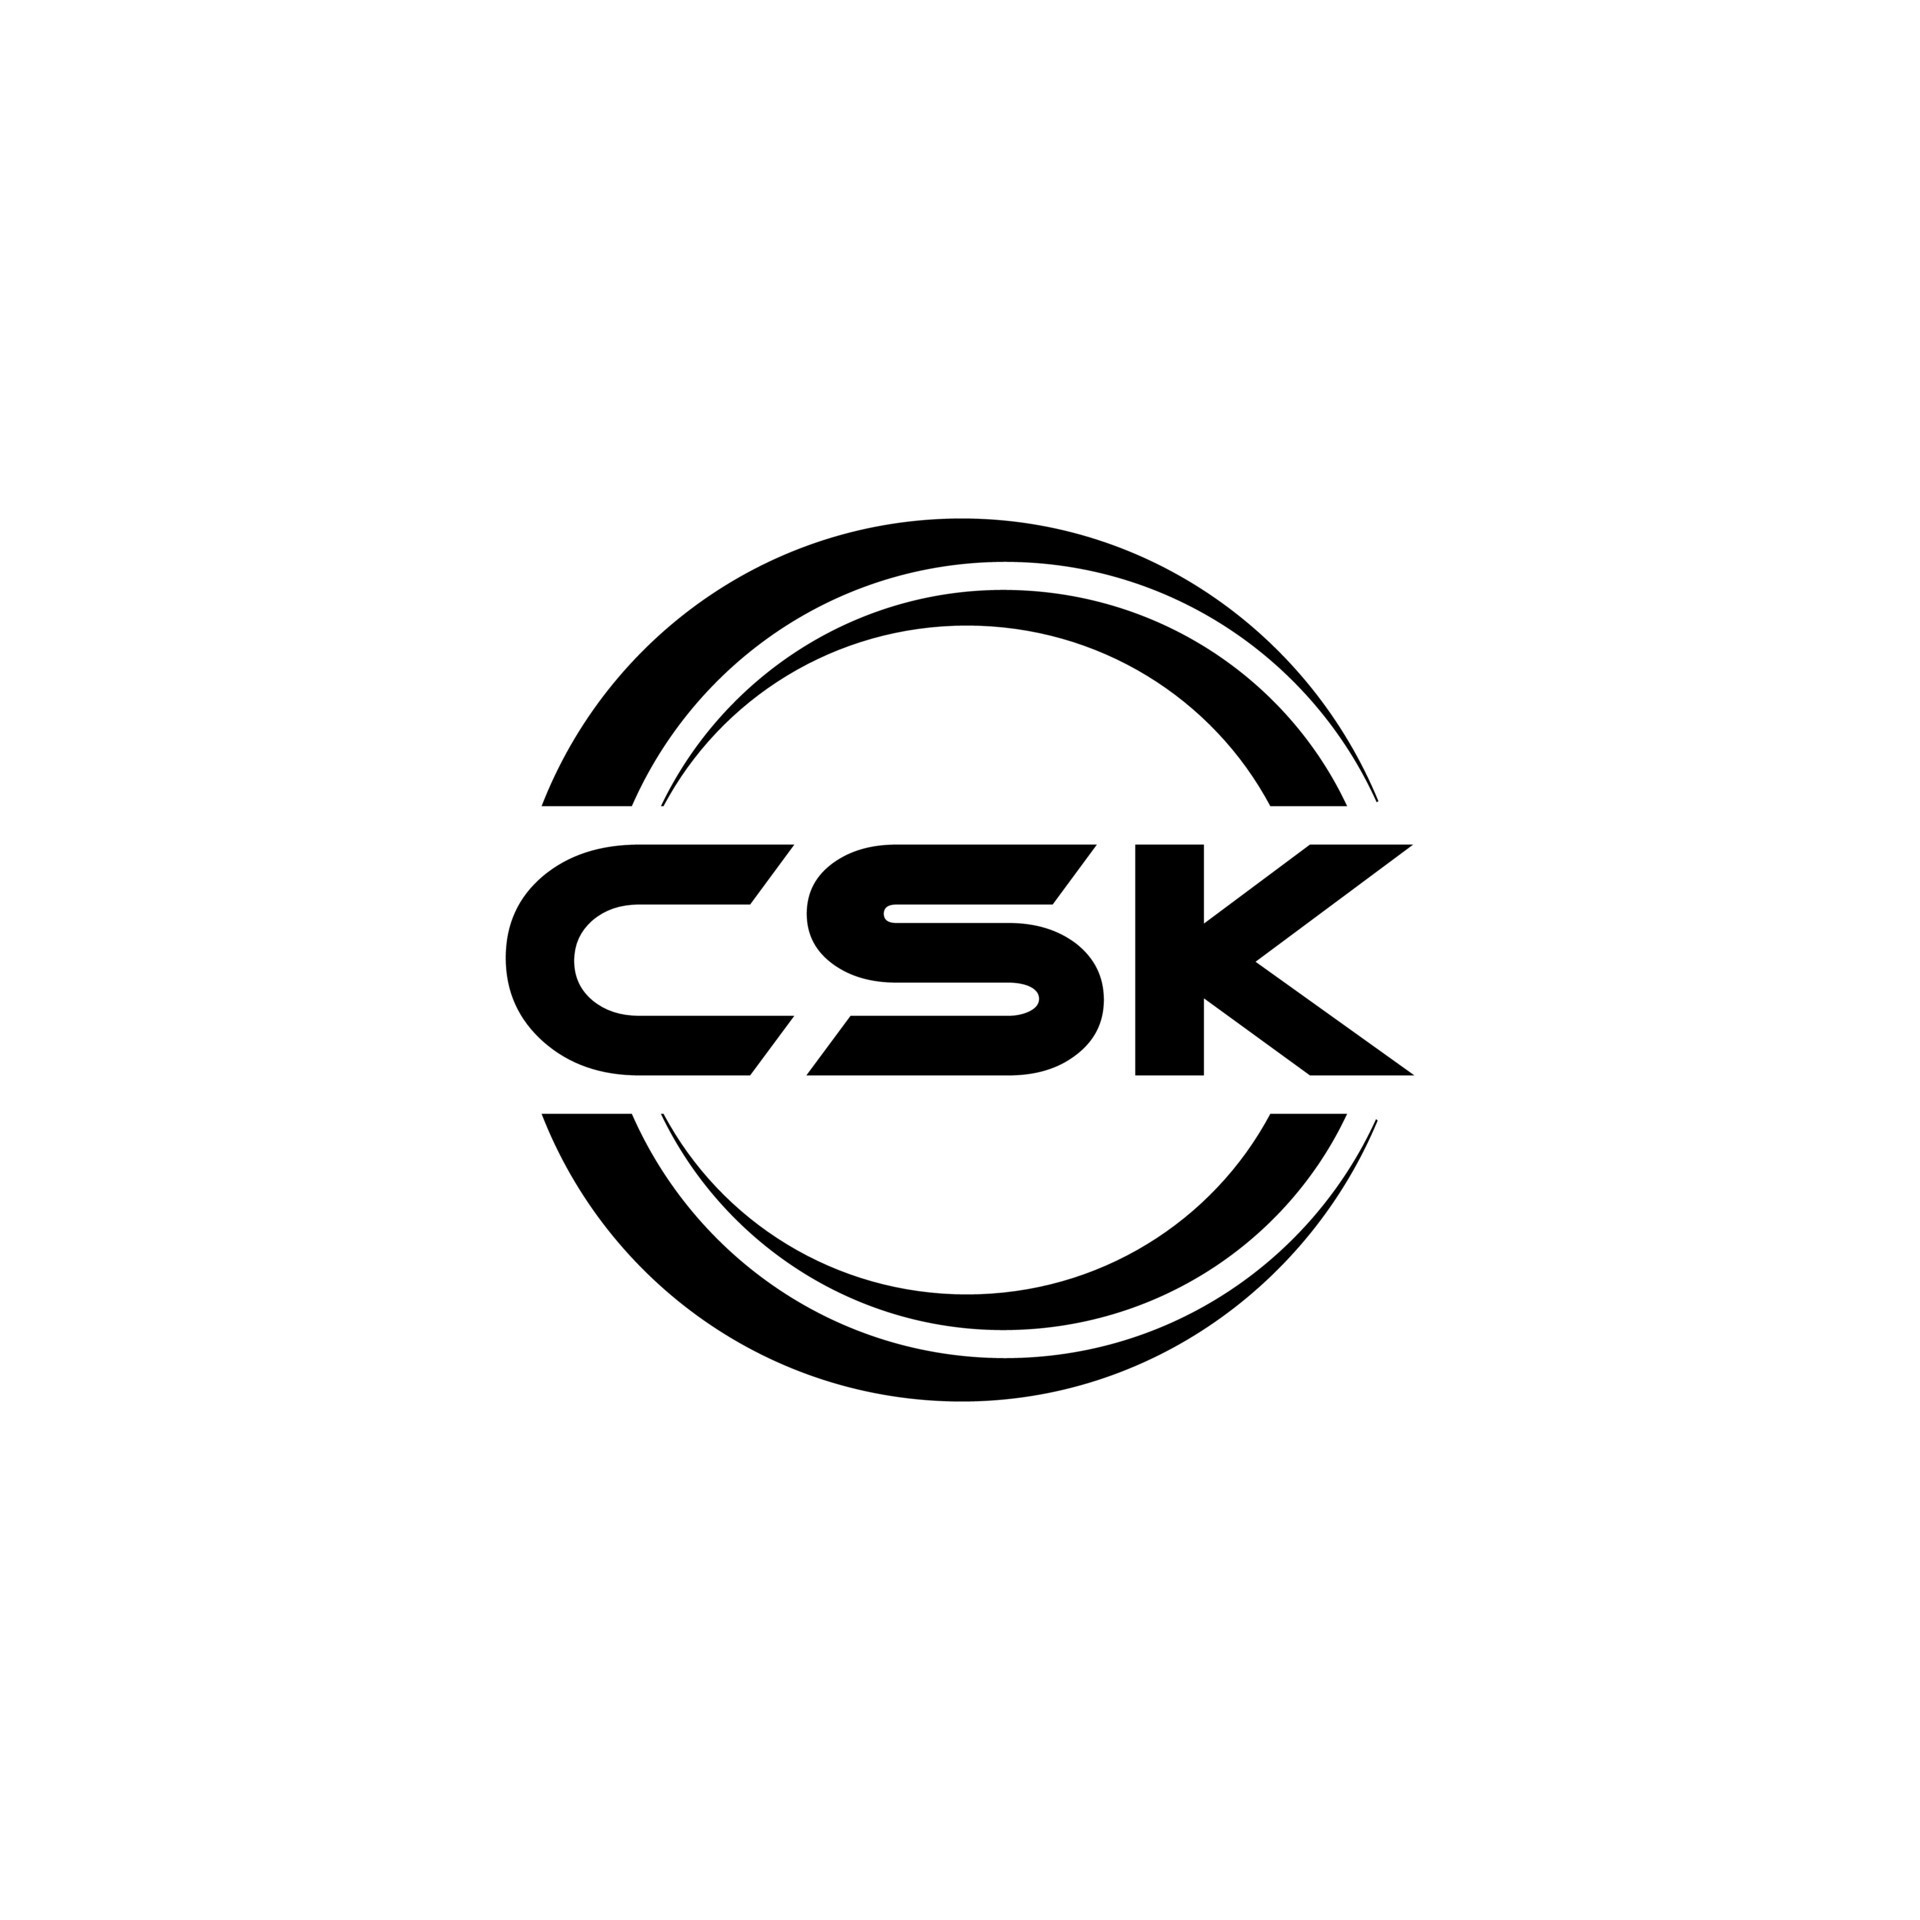 Csk letter logo design in six style polygon Vector Image-nextbuild.com.vn